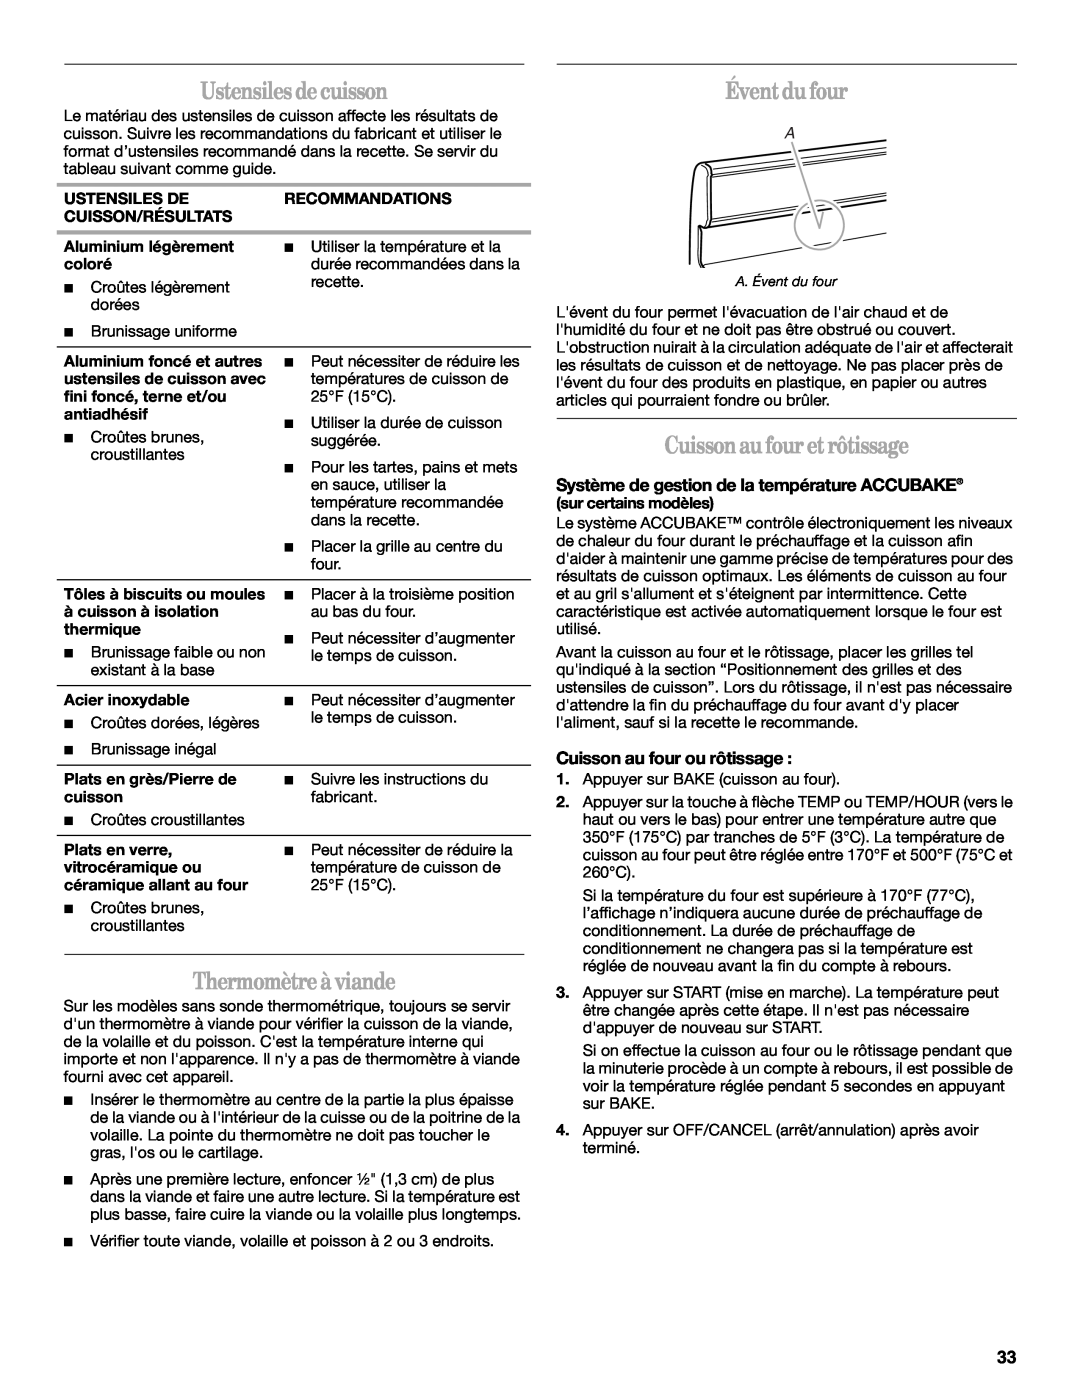 Whirlpool W10110368 manual Thermomètreà viande, Éventdu four, Cuissonau fouretrôtissage, Ustensiles decuisson 